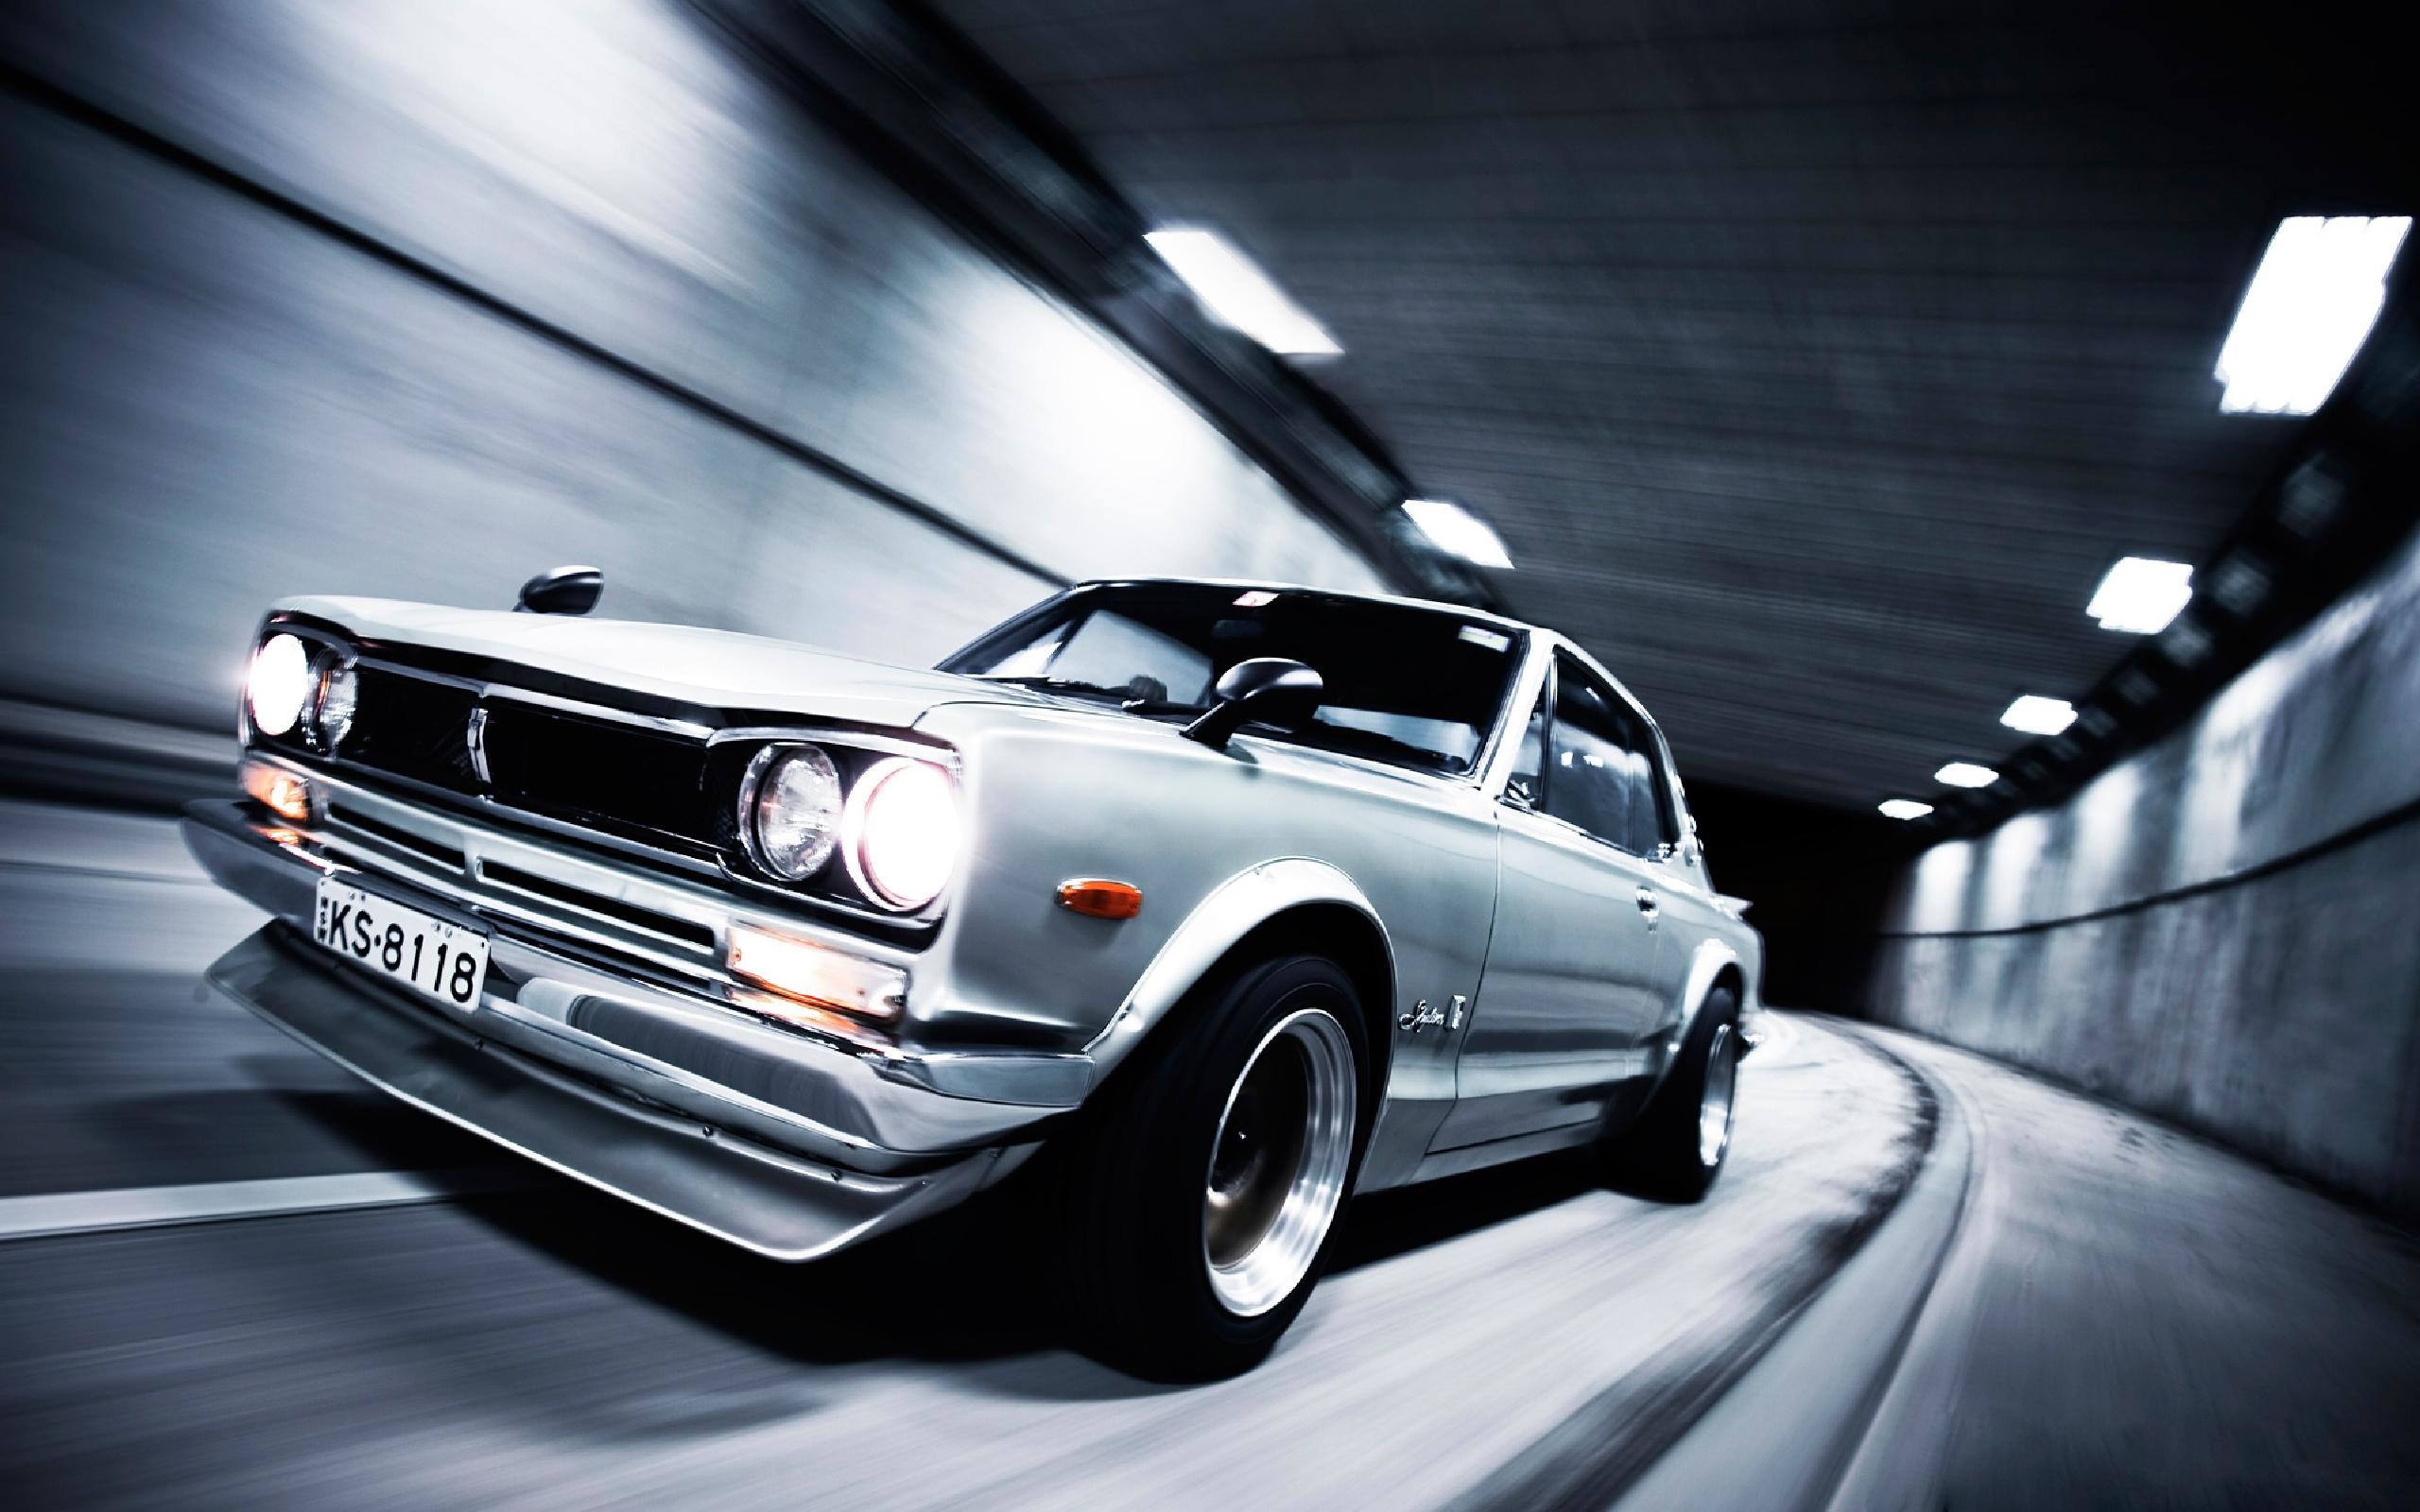 2560x1600 Nissan Skyline GT-R wallpapers HD